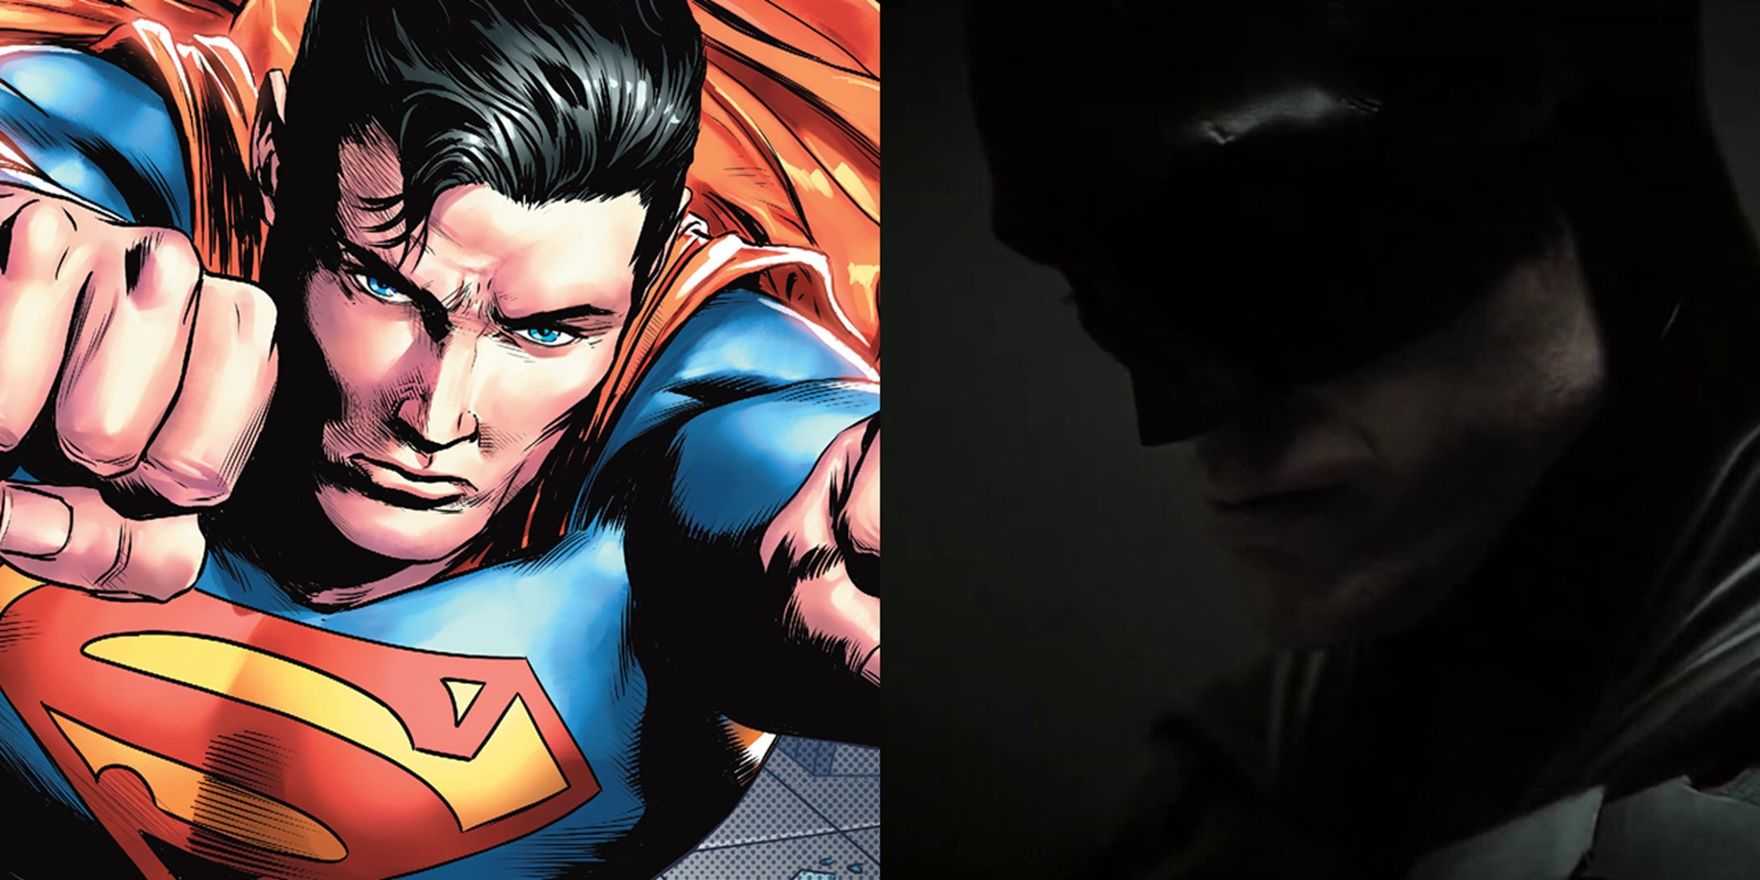 Superman in the DC comics and Robert Pattinson in The Batman